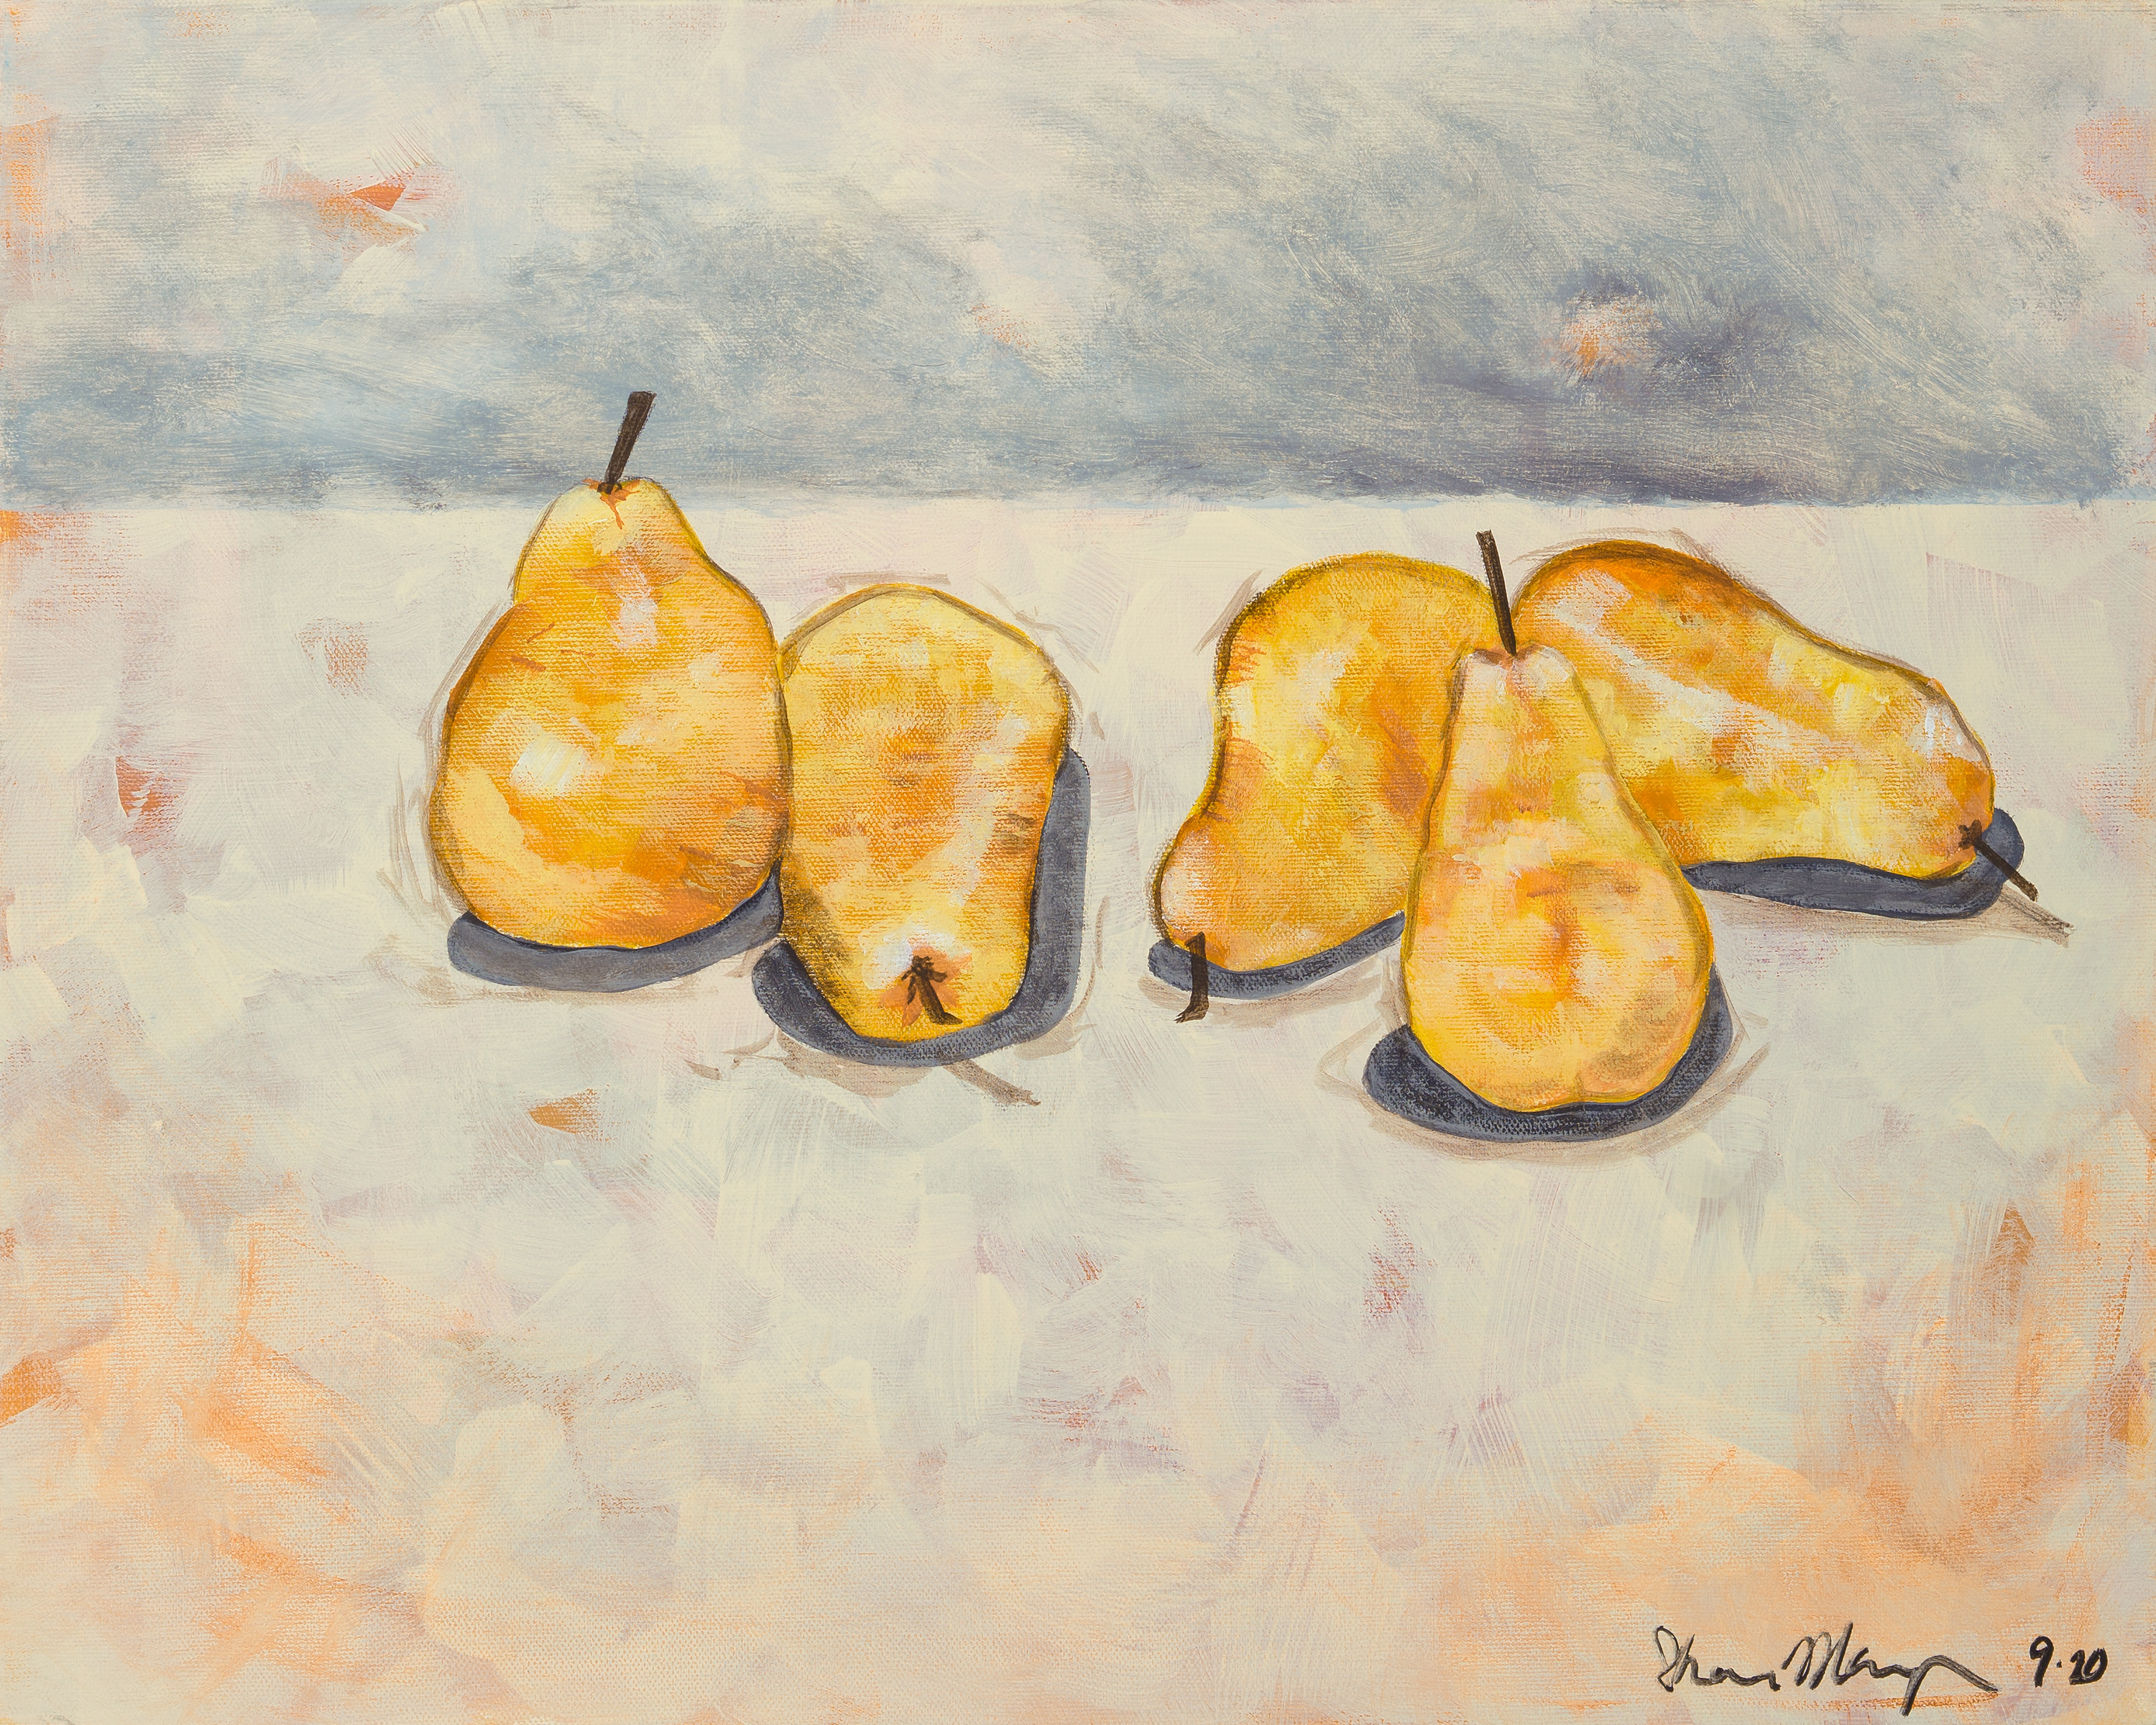 Pears slxzdm